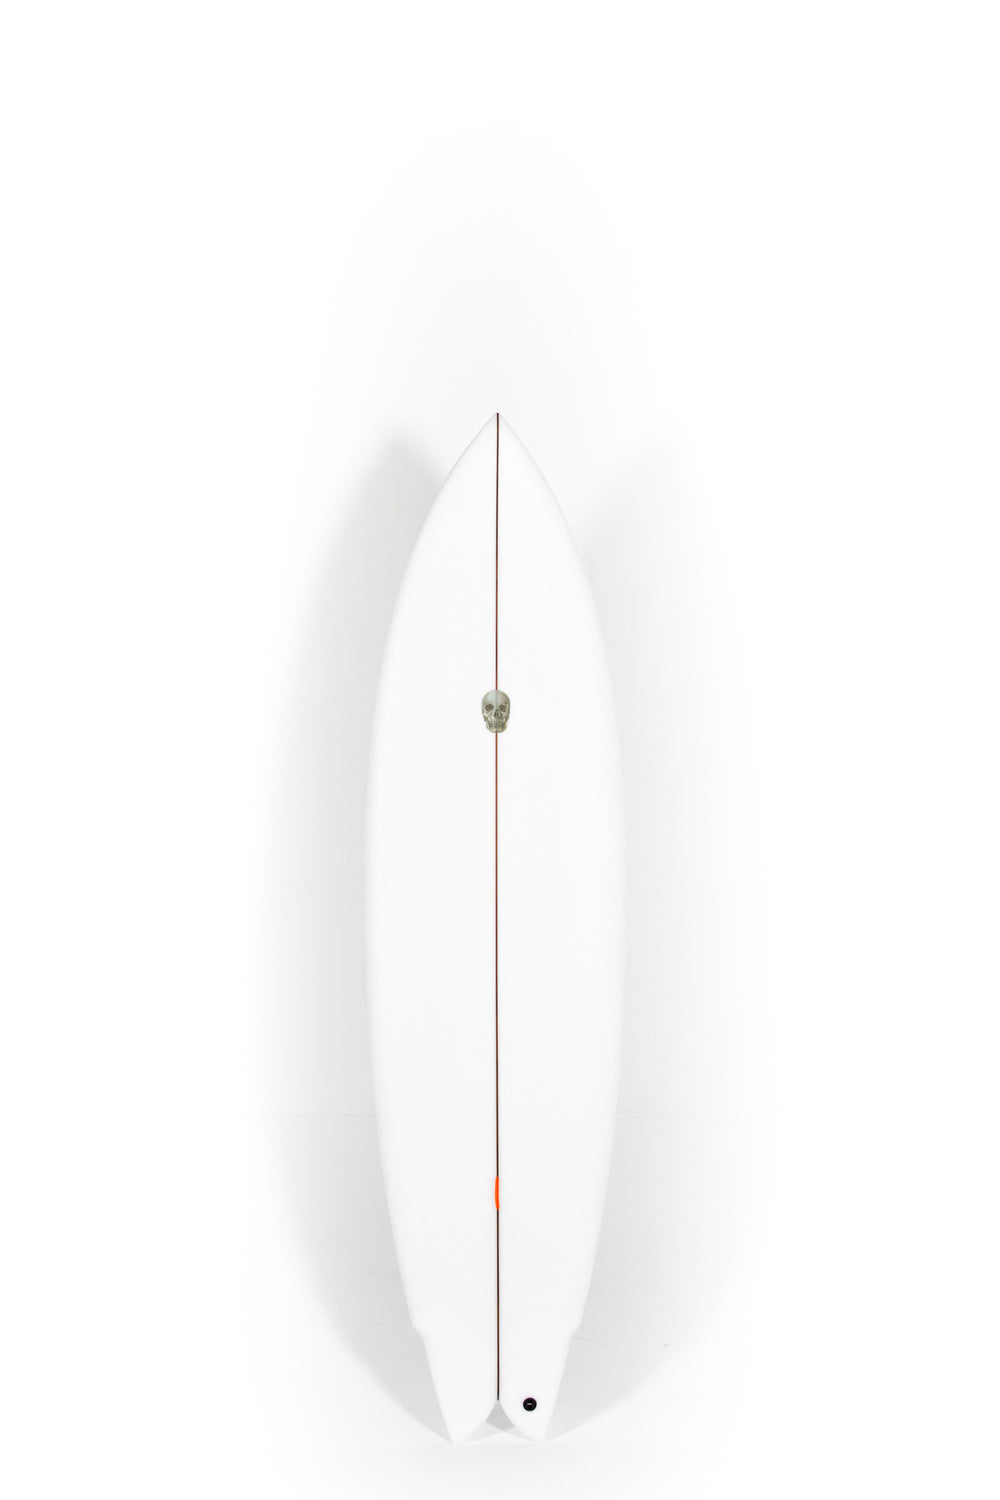 Pukas Surf Shop - Christenson Surfboard  - WOLVERINE by Chris Christenson - 6’8 x 20 7/8 x 2 11/16 - CX05373